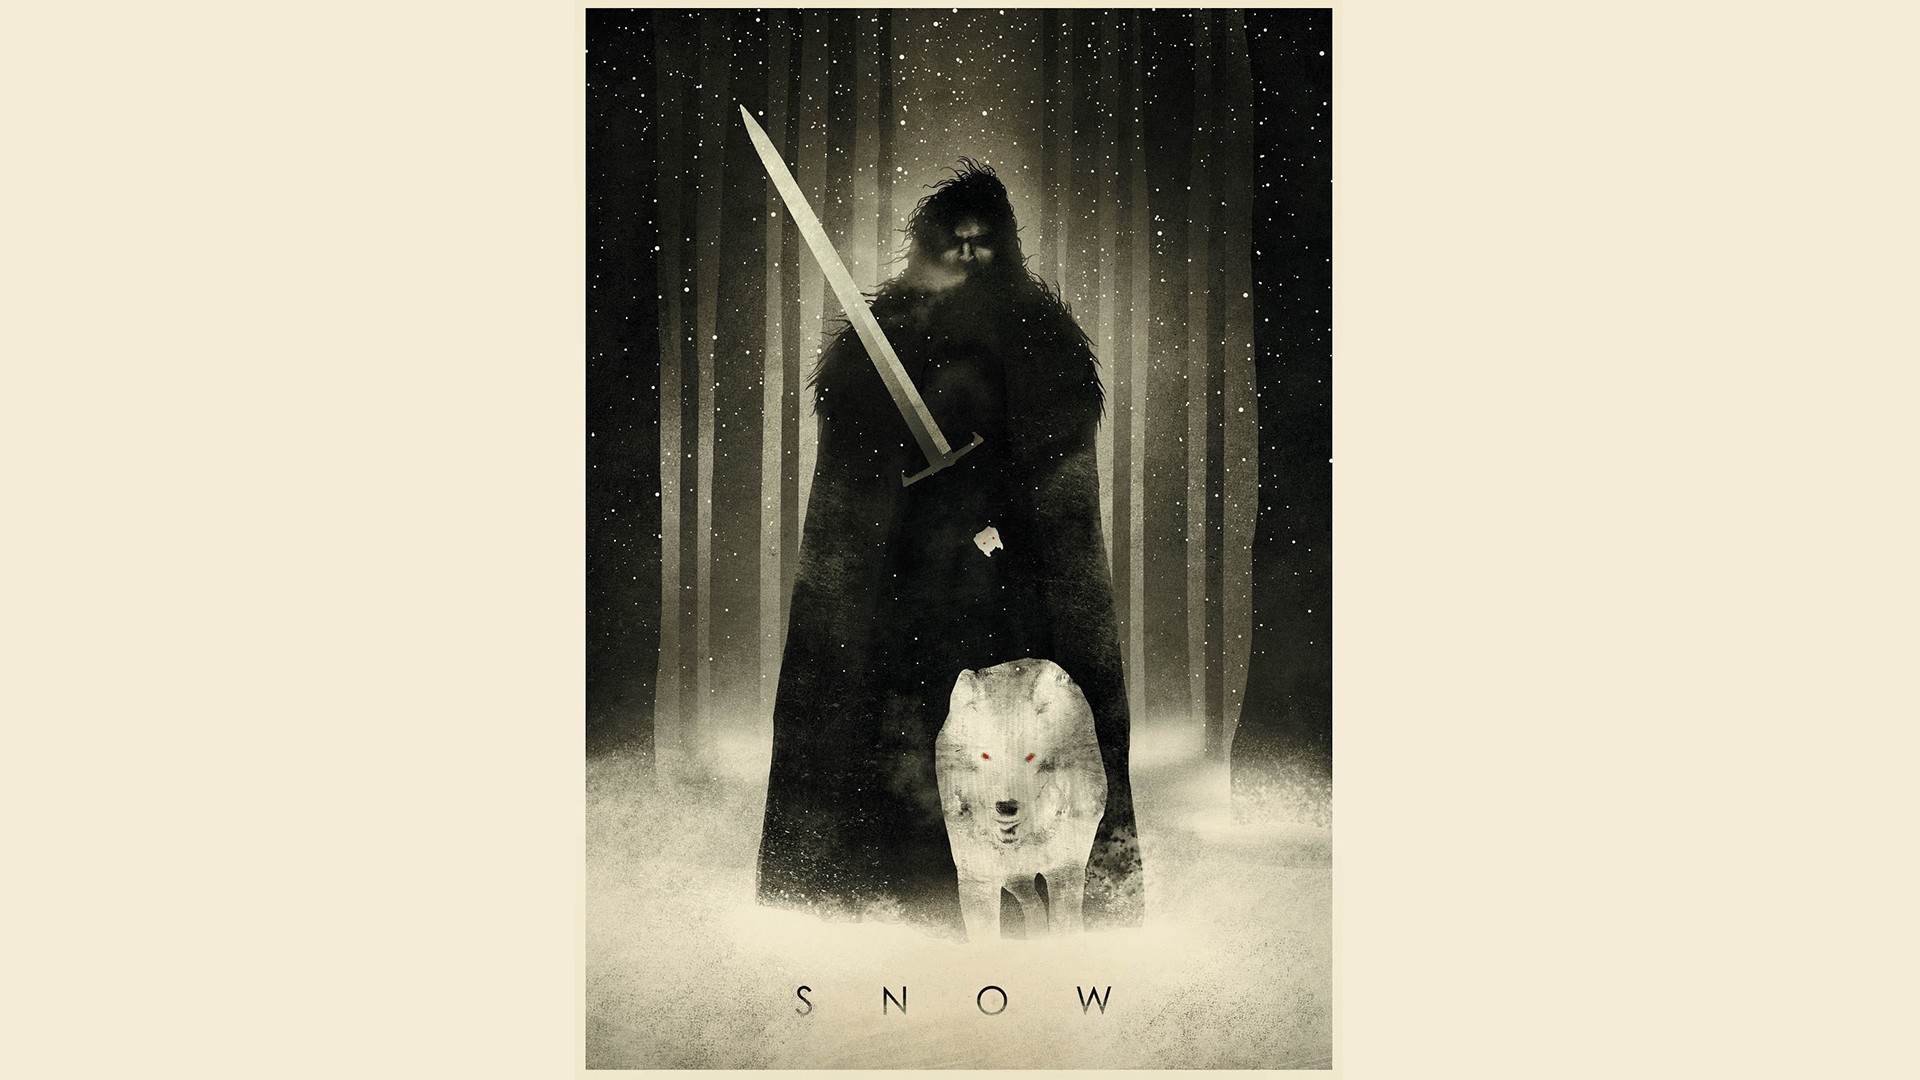 General 1920x1080 Game of Thrones Jon Snow fantasy men fantasy art sword TV series digital art simple background